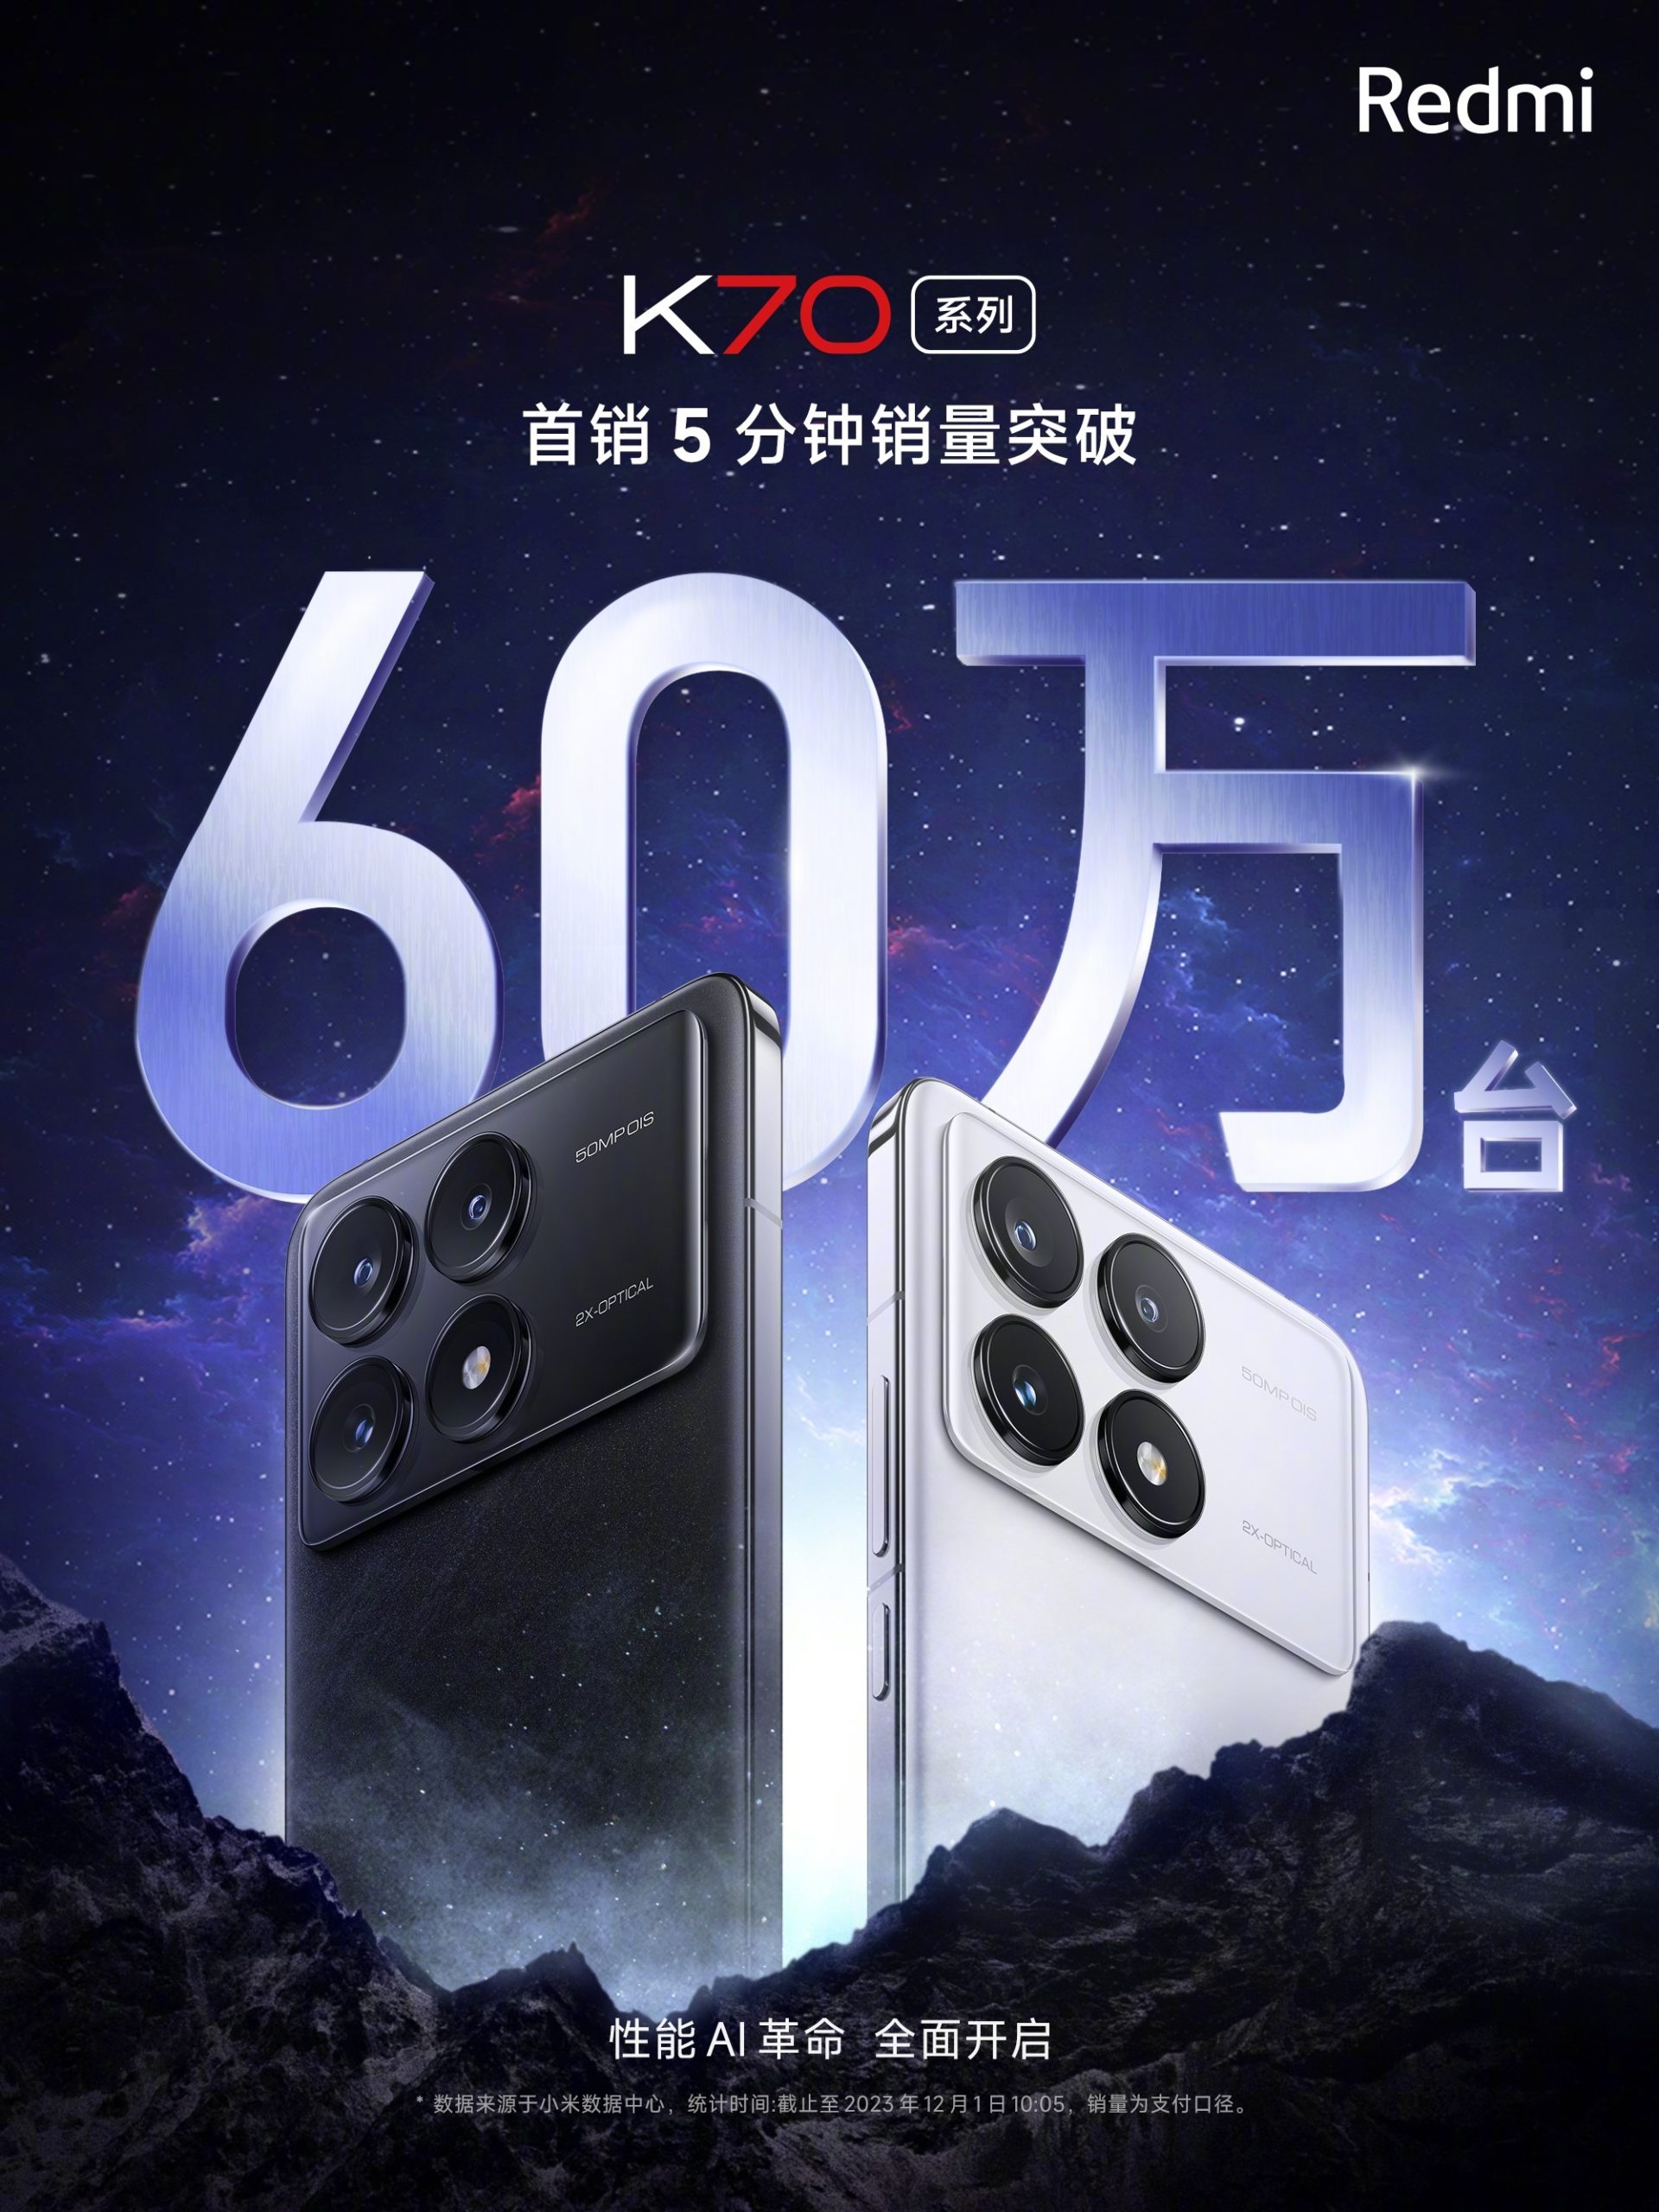 Redmi K70 Pro launch date revealed, Snapdragon 8 Gen 3 in tow